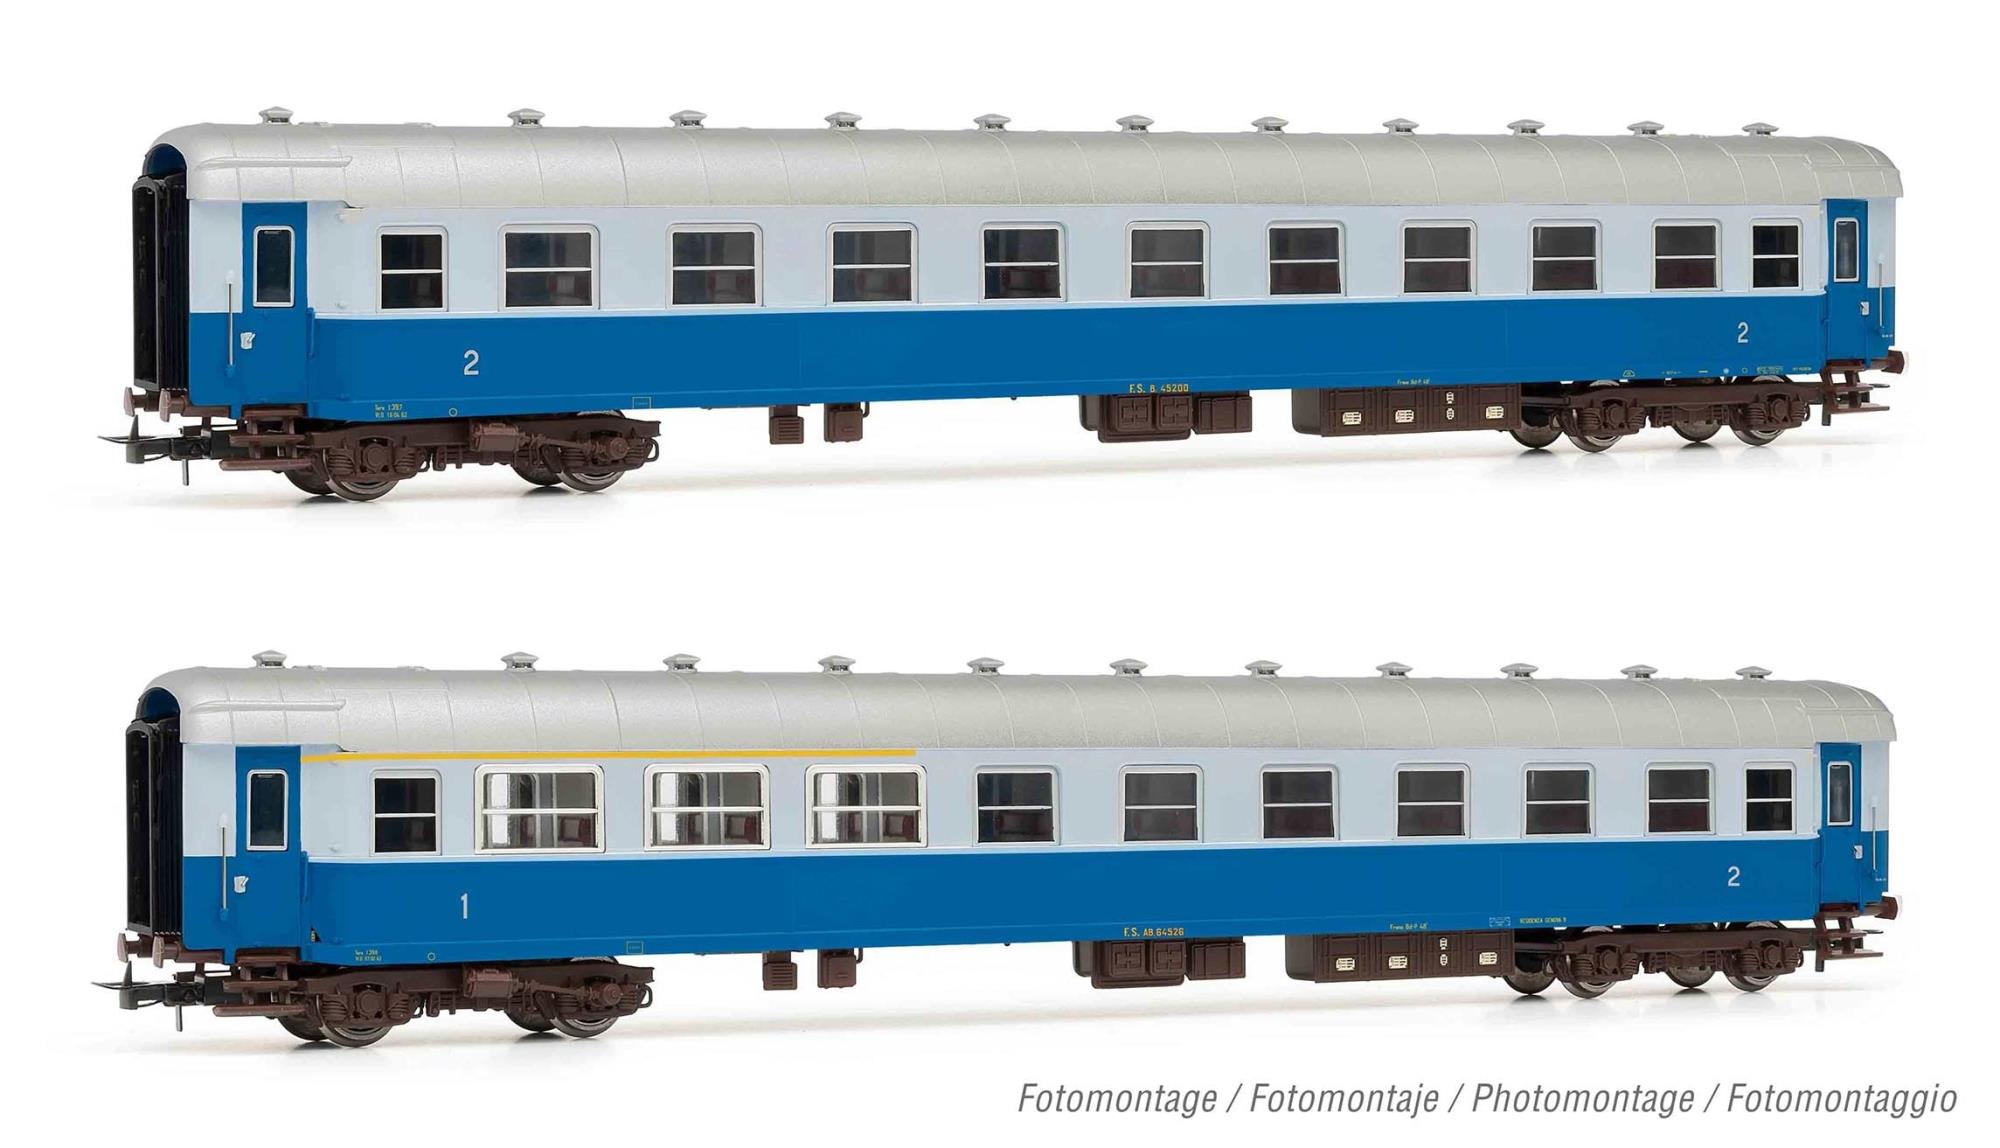 RIVAROSSI HR4290 - FS set due Carrozze tipo 59 una 1°/2° classe, una 2° classe, livrea blu/azzurro, epoca III-IV